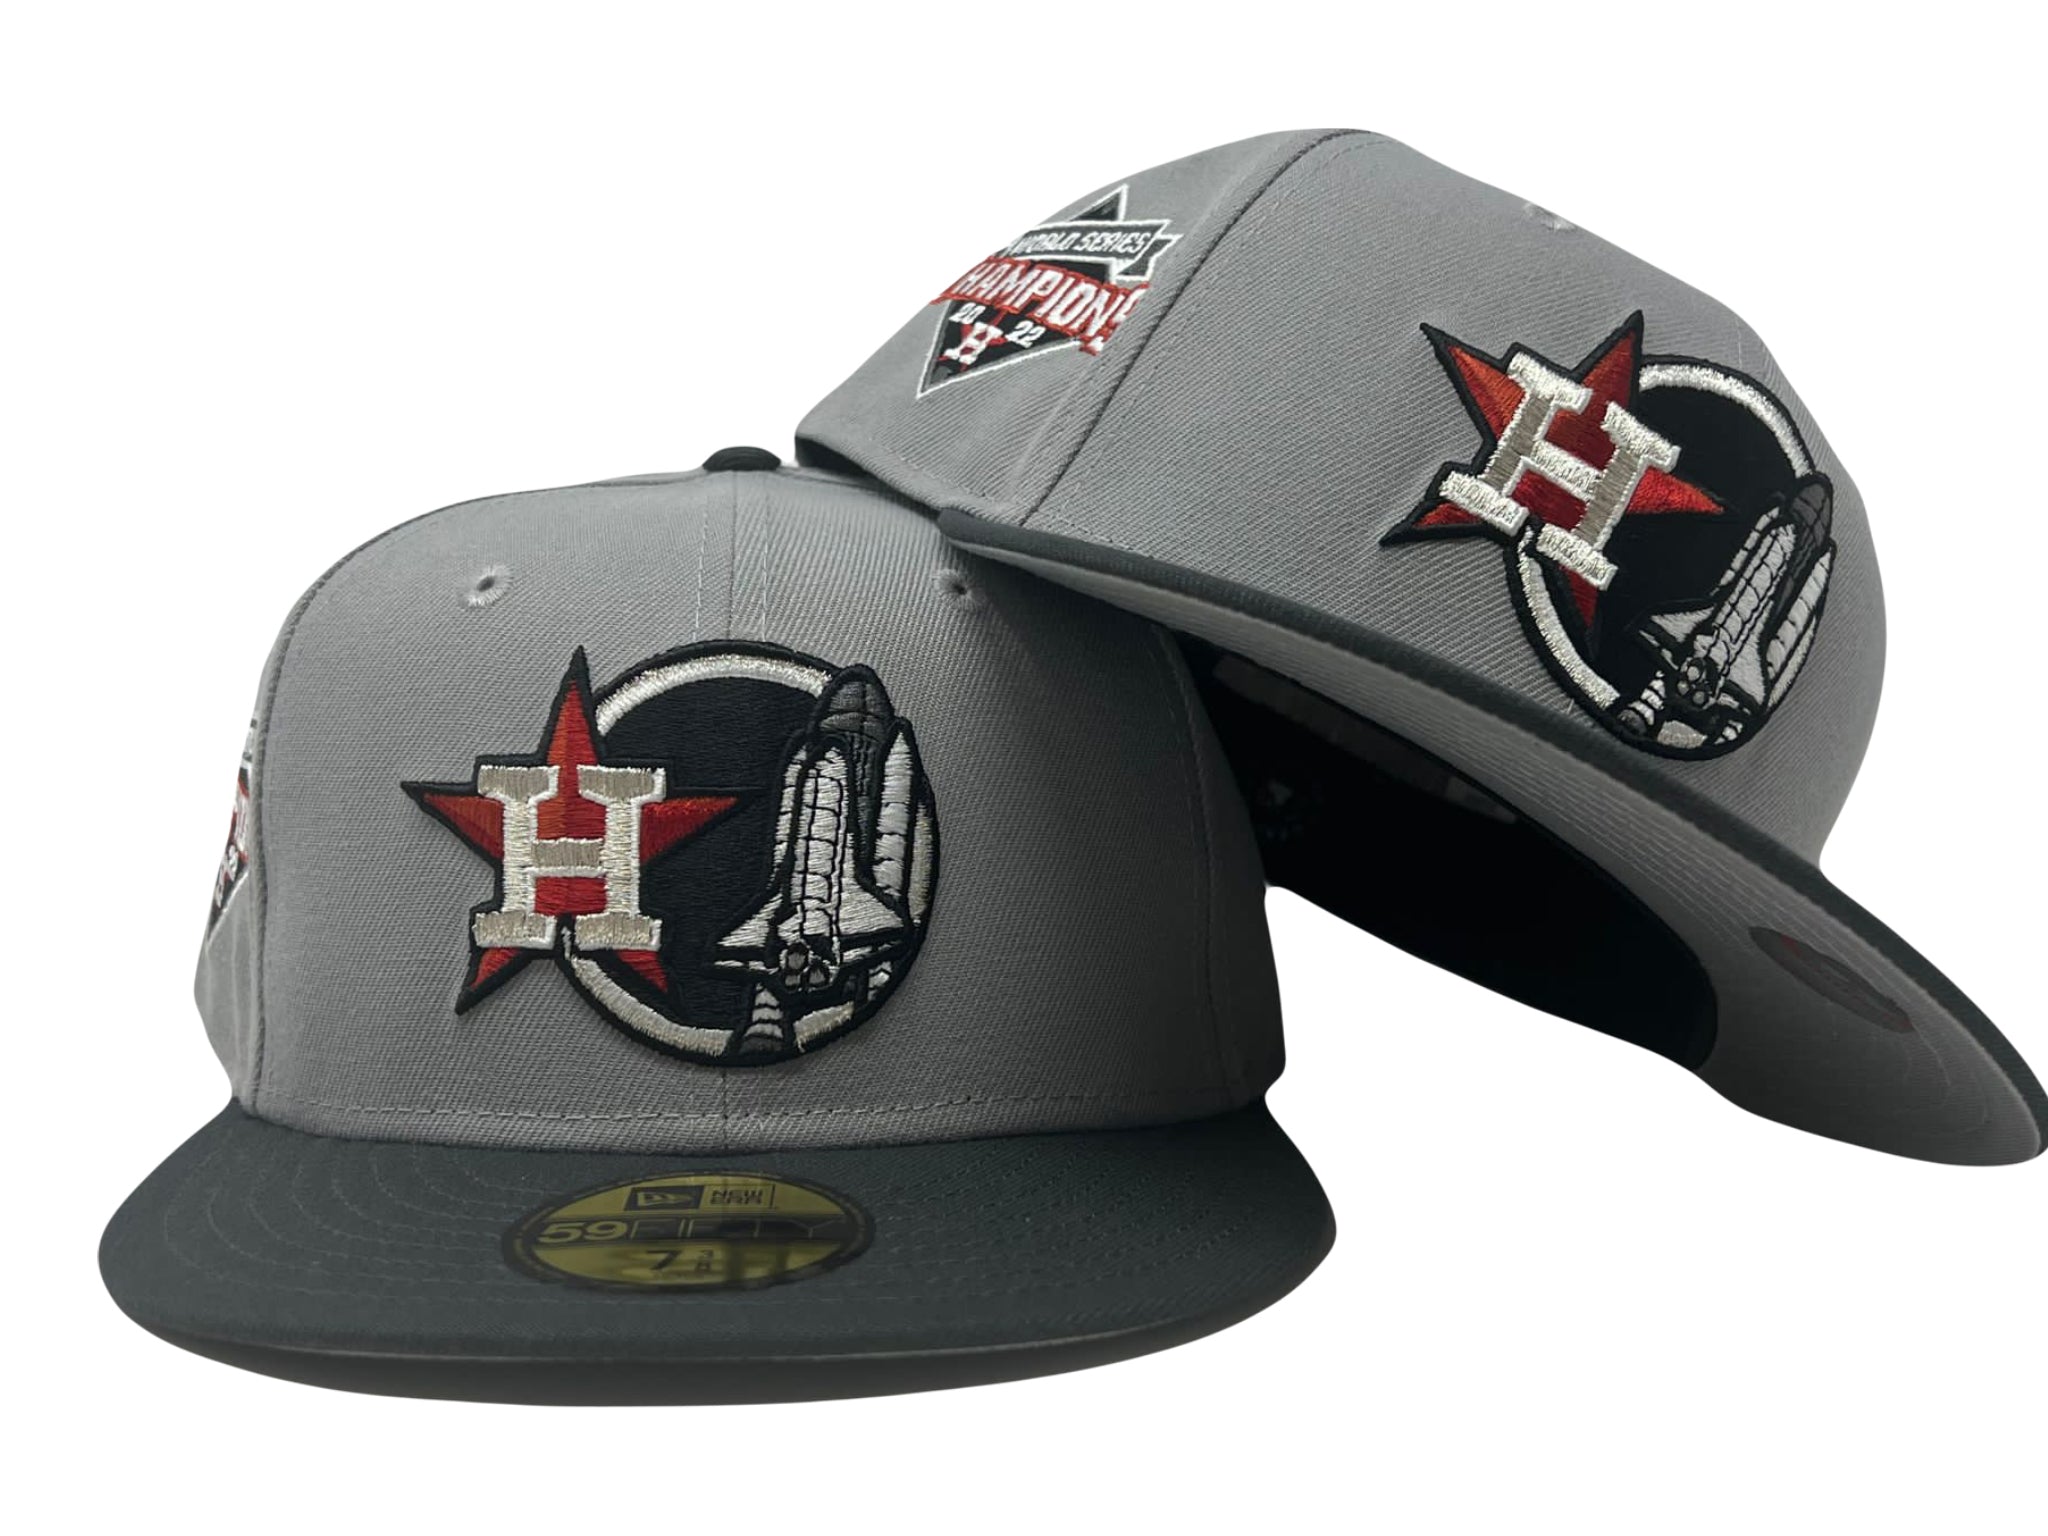 Houston Astros Baseball Cap New Era Hat 5950 Fitted MLB Black White 59Fifty